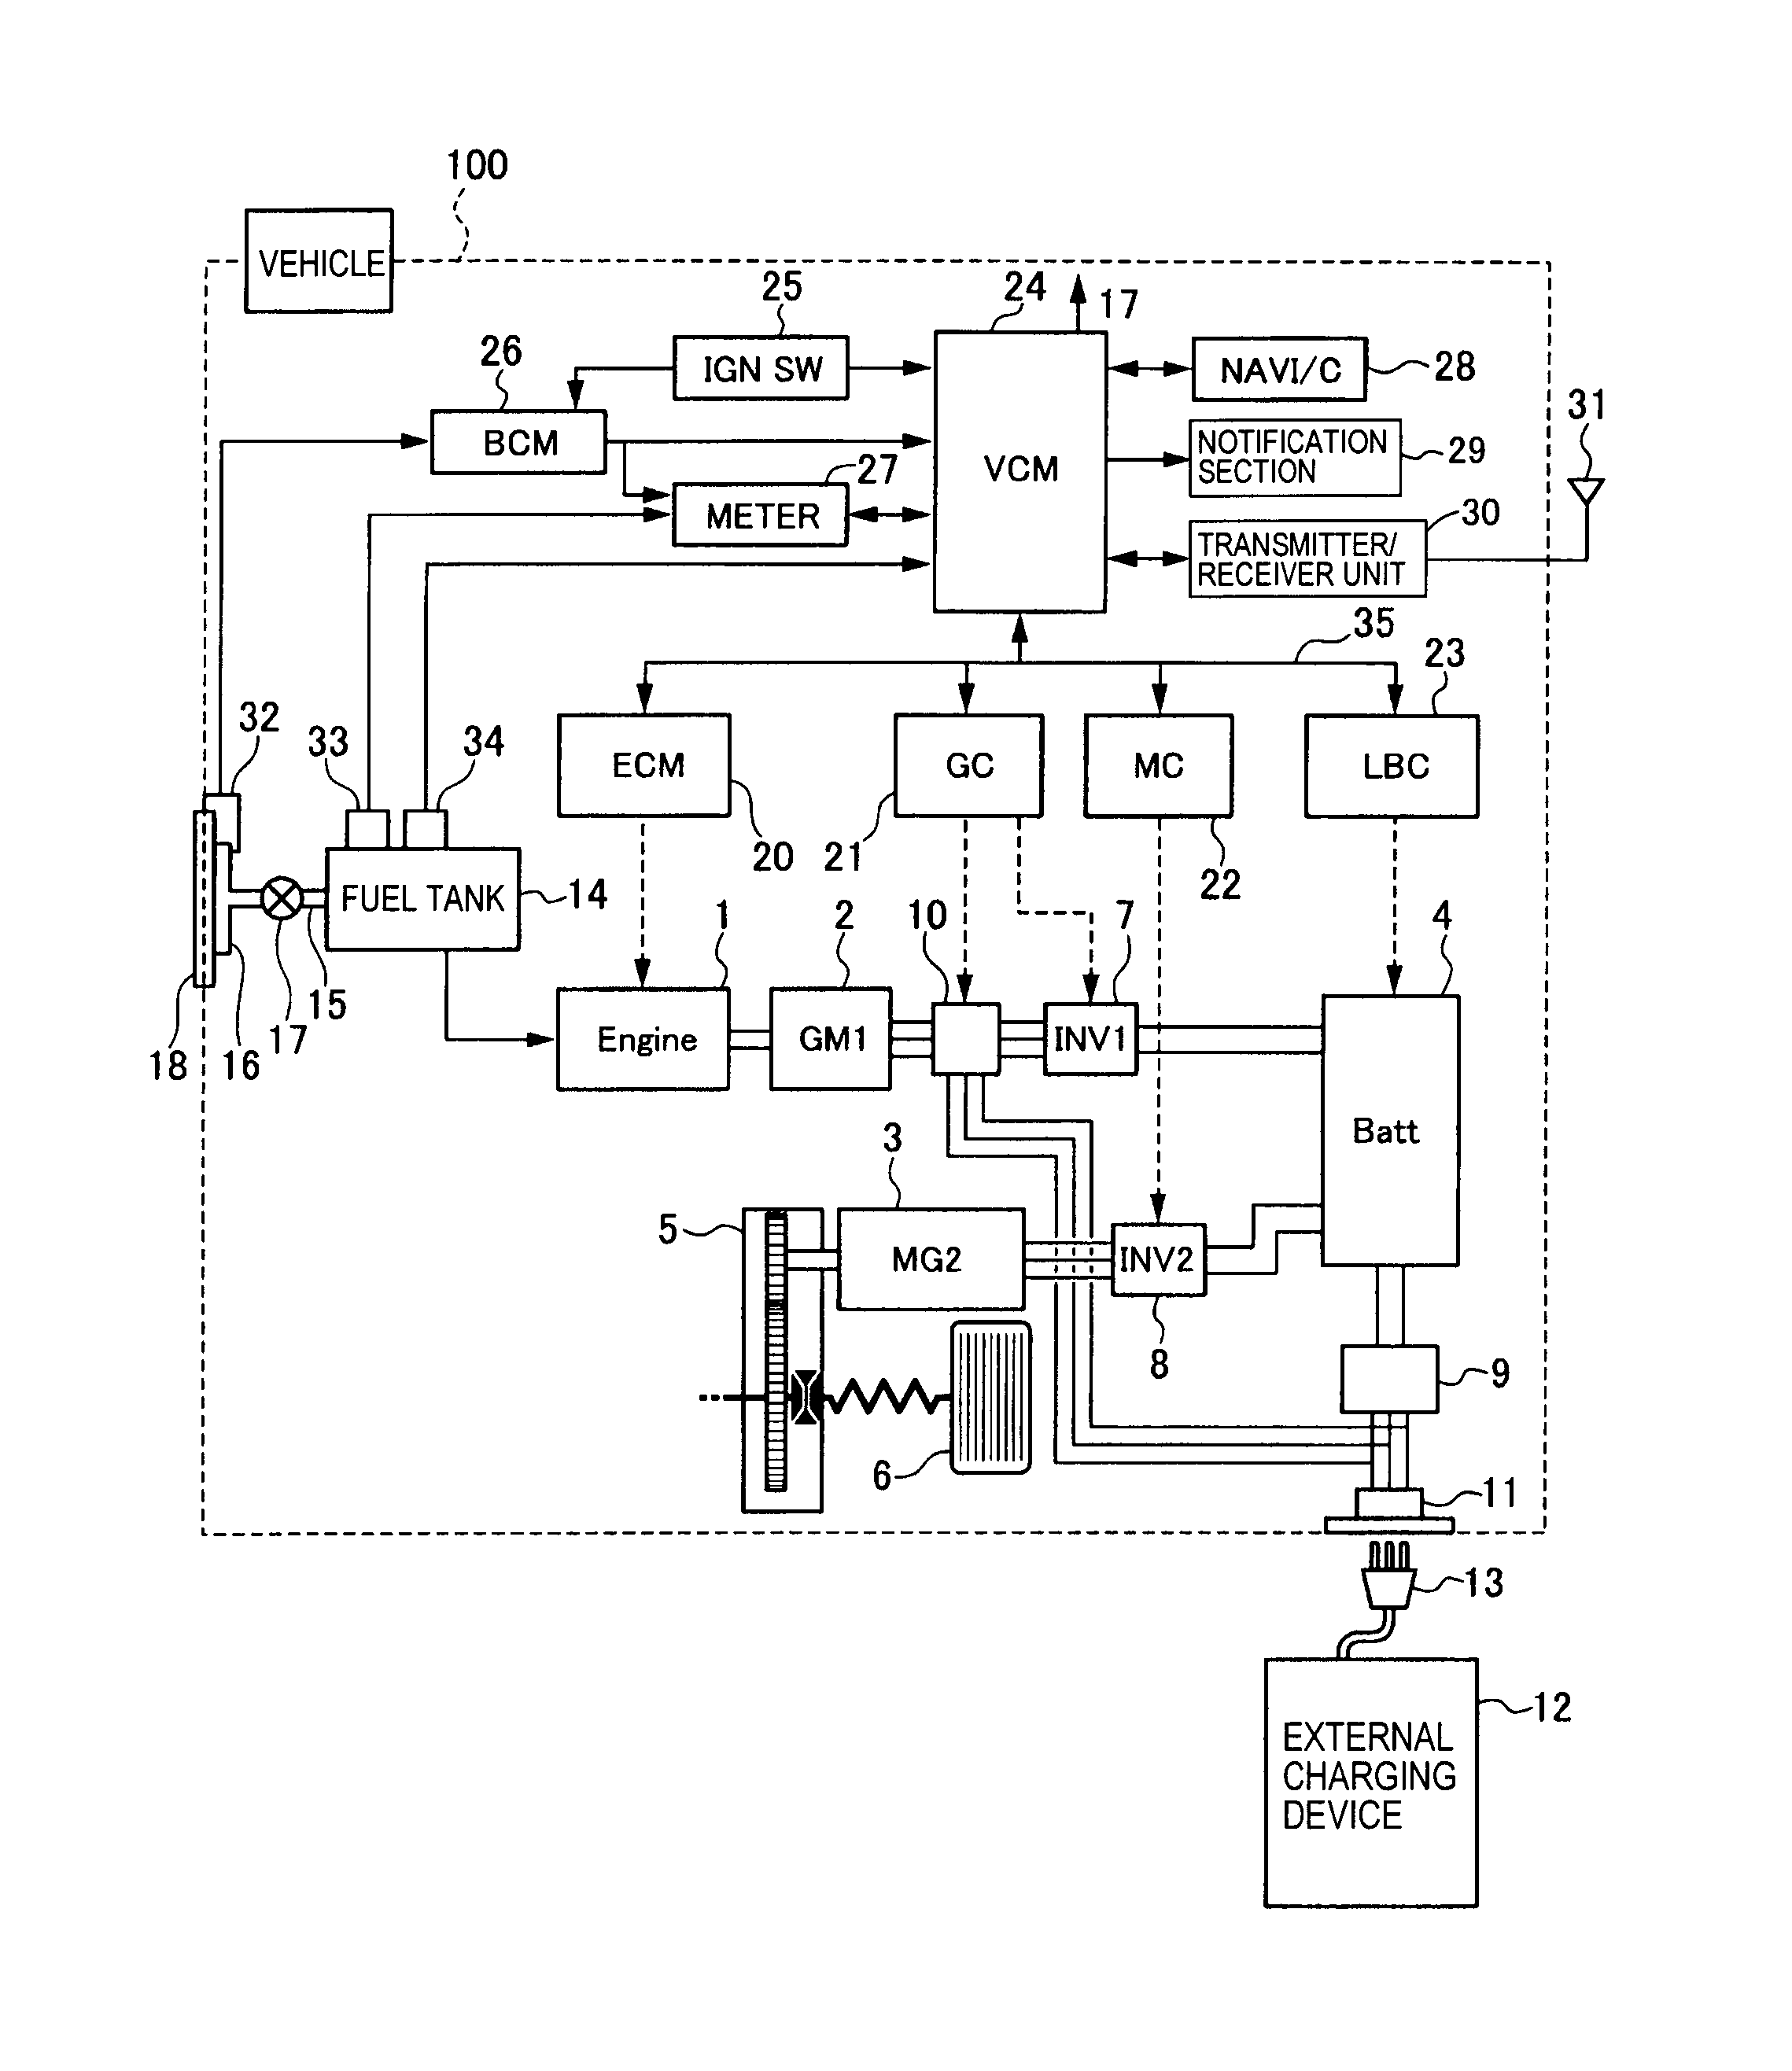 taco sr501 wiring diagram